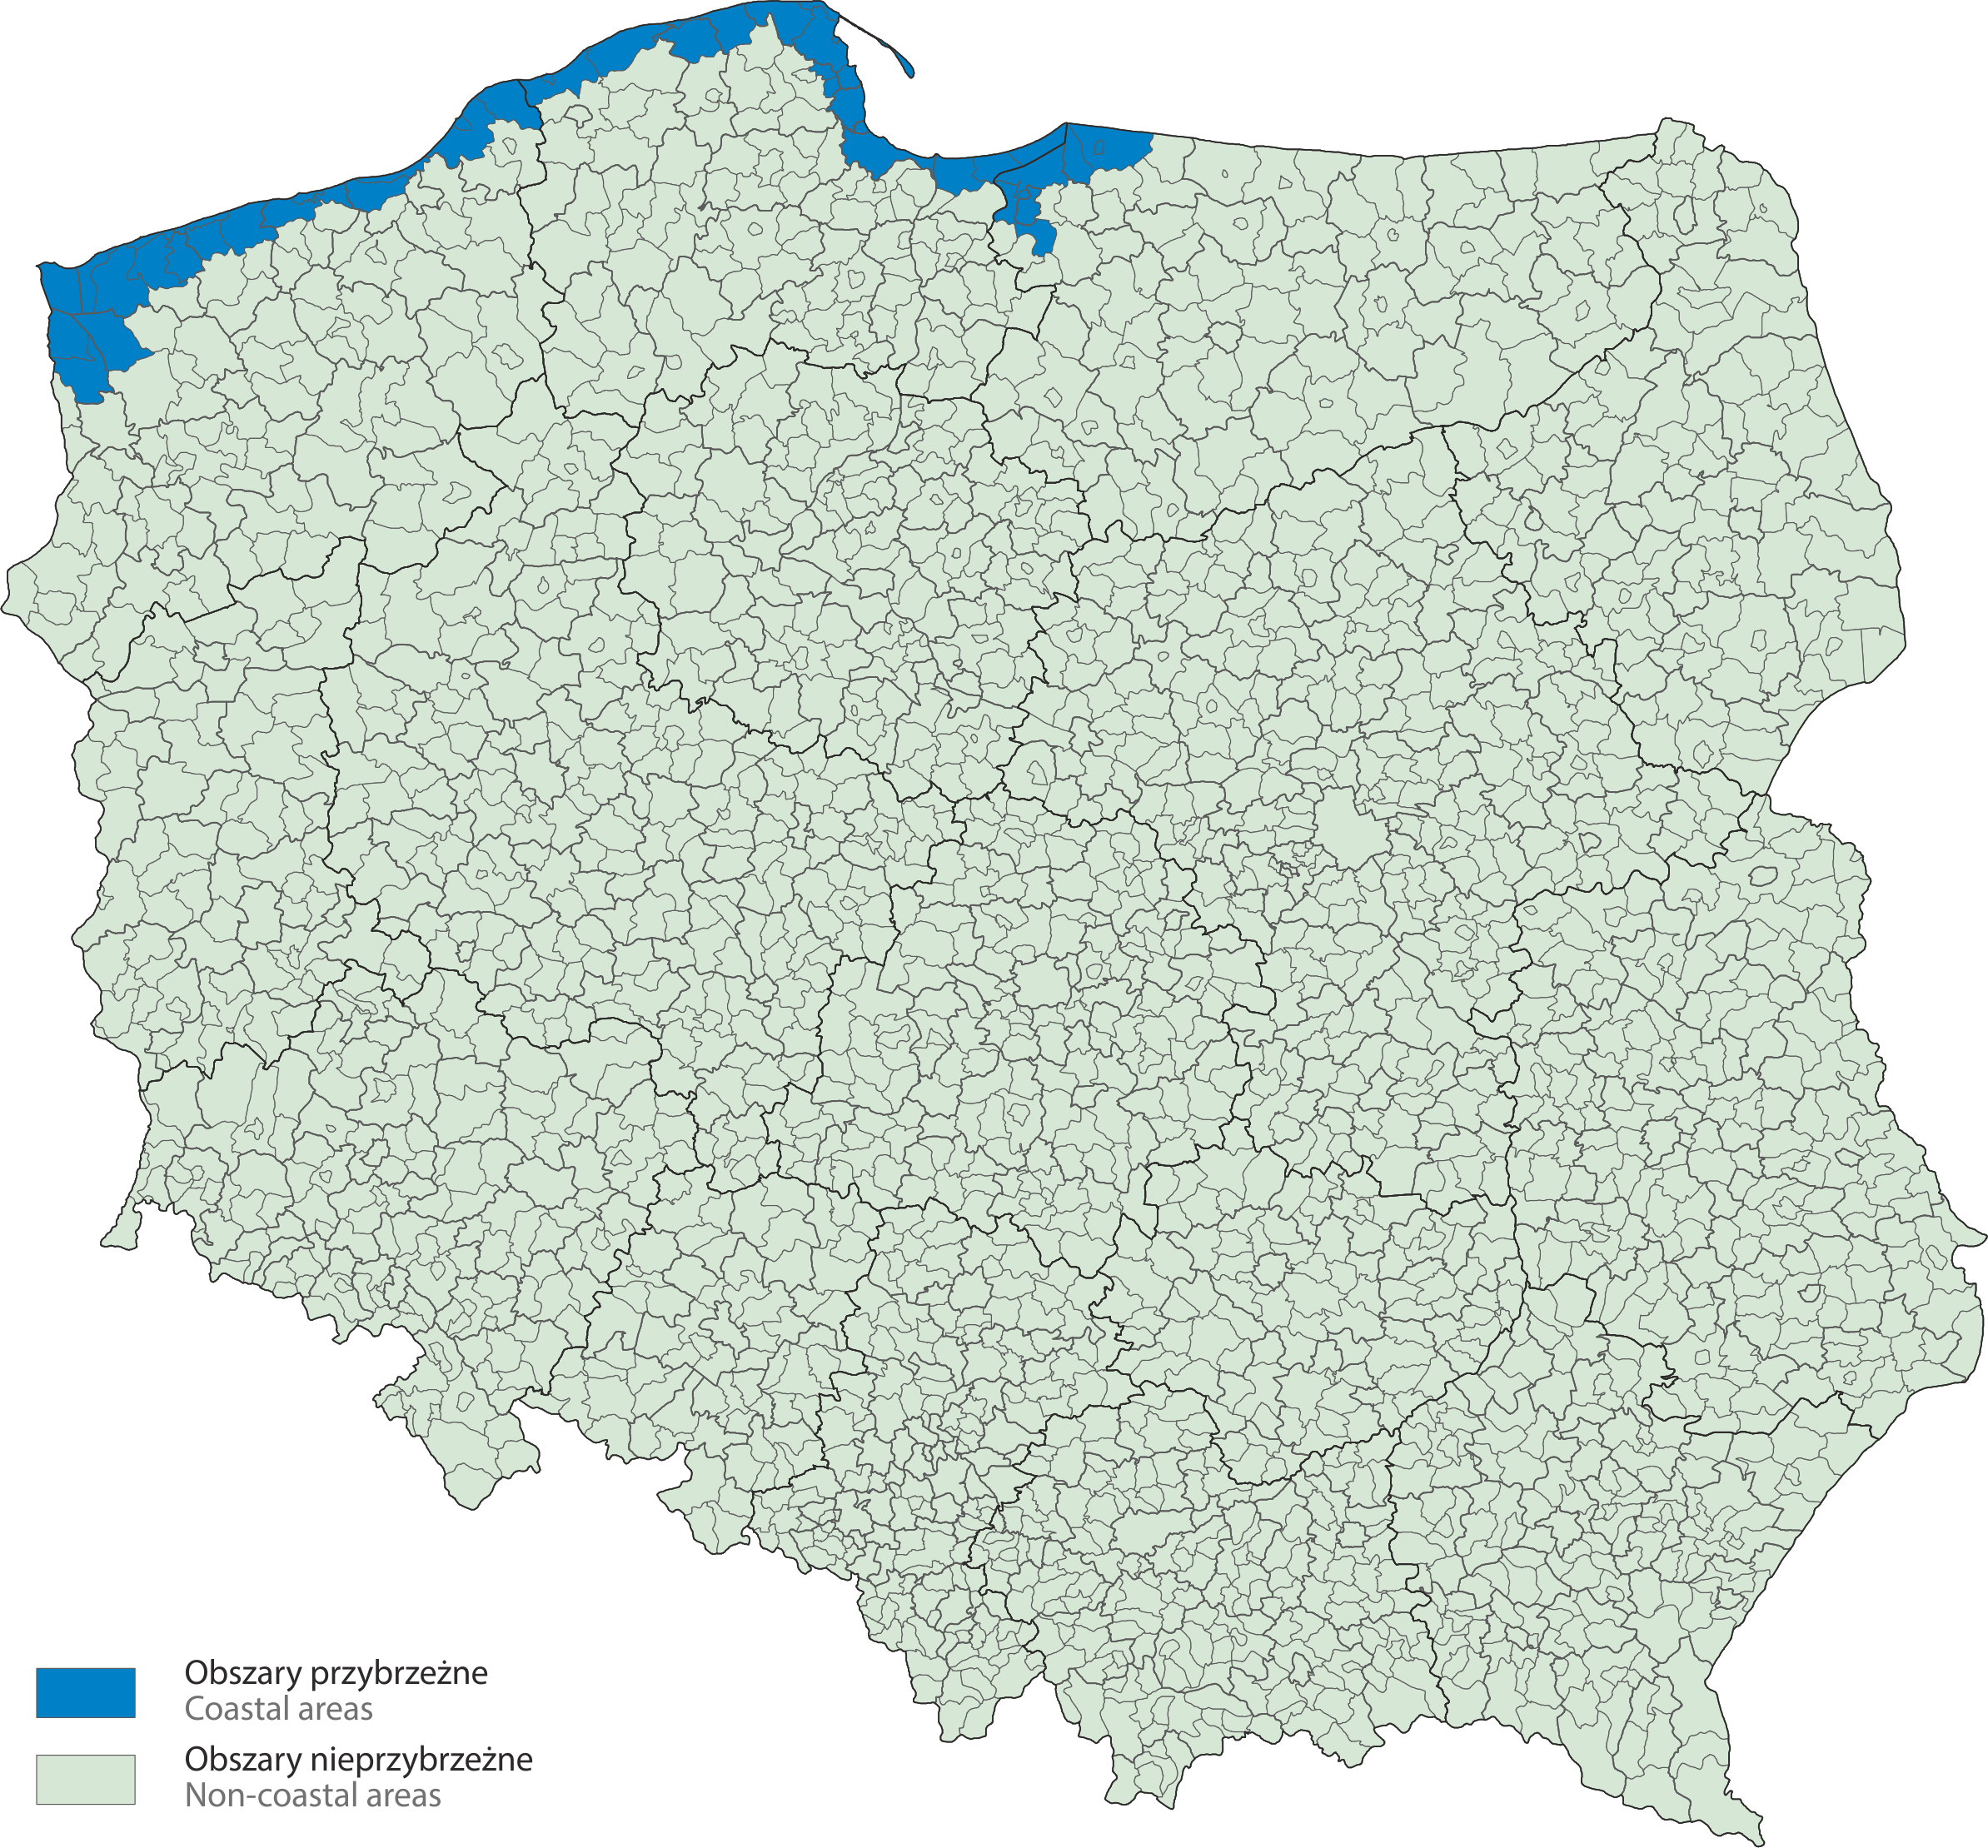 Coastal and non-coastal areas in Poland in 2018